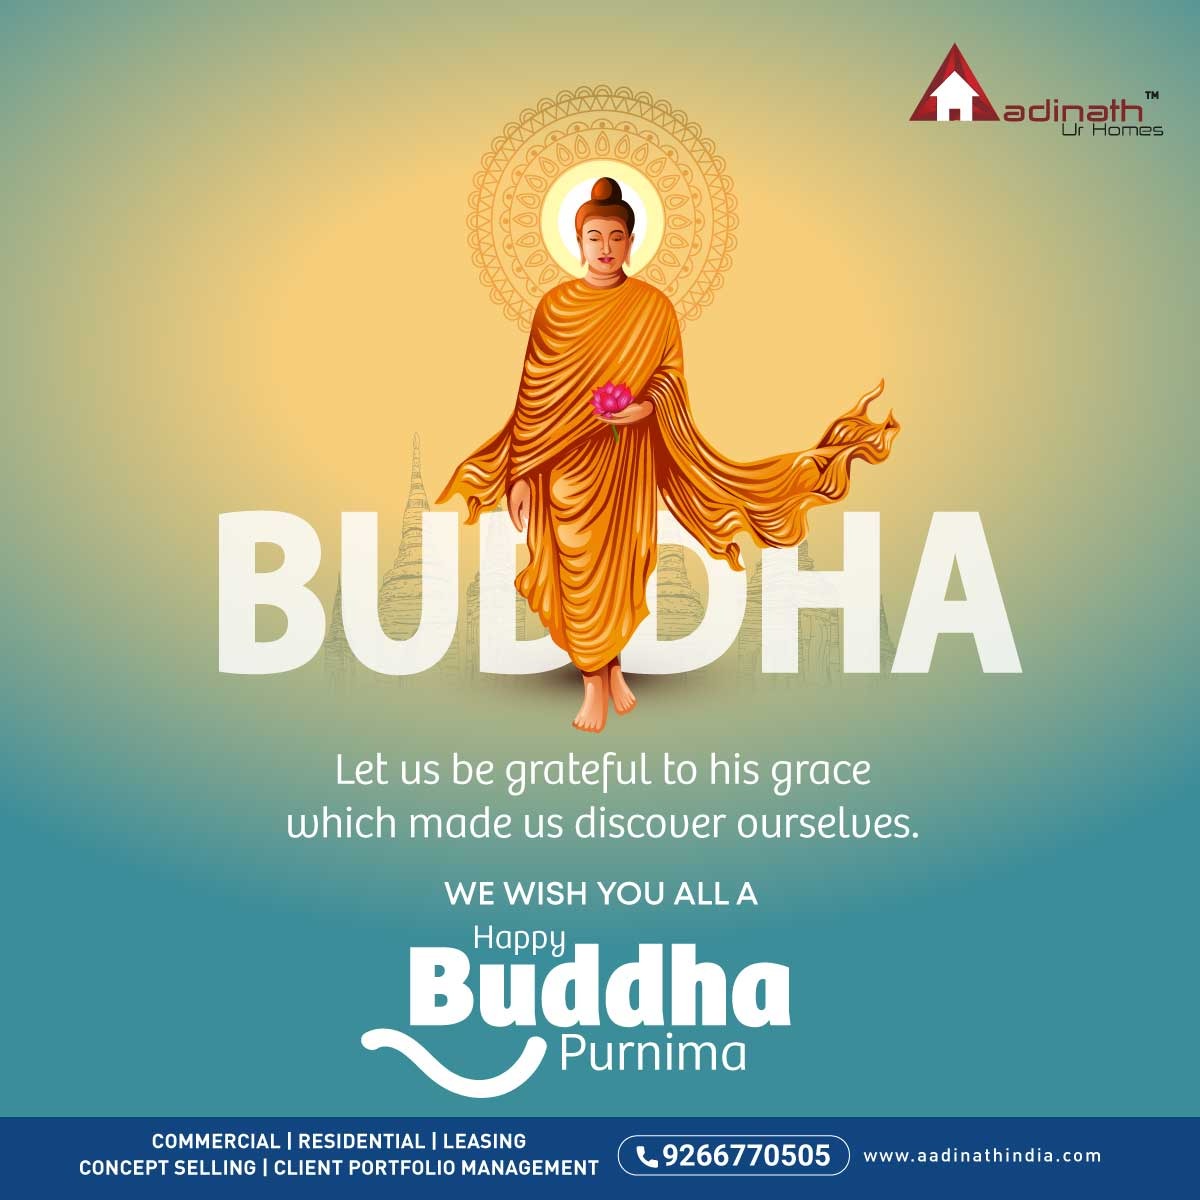 Aadinath Ur Homes wishes you a serene Buddha Purnima! Happy Buddha Purnima! #Spirituality #Serenity #Blessings #Mindfulness #Compassion #Harmony #InnerPeace #Wisdom #HappyBuddhaPurnima #AadinathIndia #OfficeSpaces #ShopSpaces #AadinathUrHomes